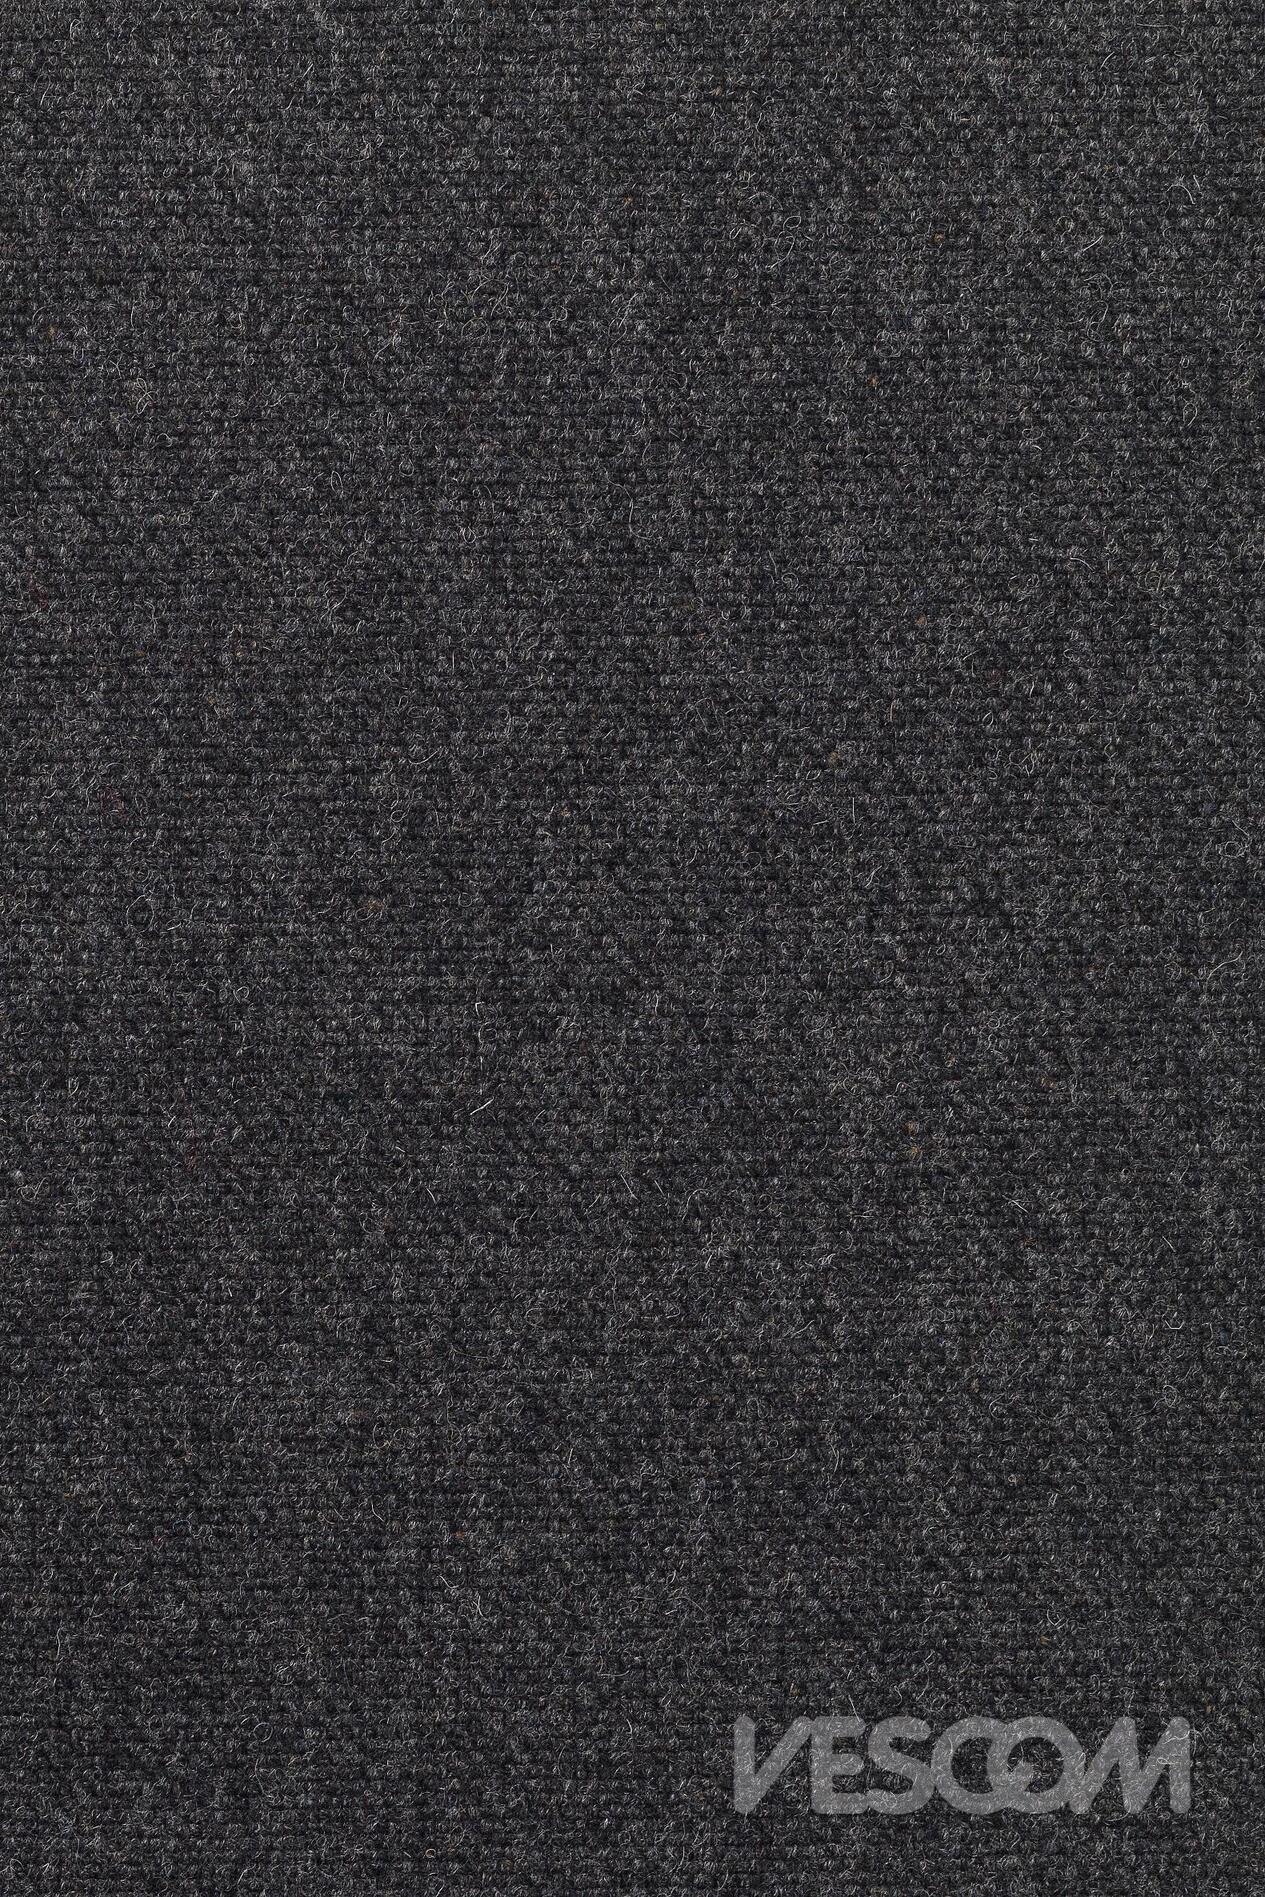 Vescom-Wolin-Upholstery-Fabric-7050.10.jpg